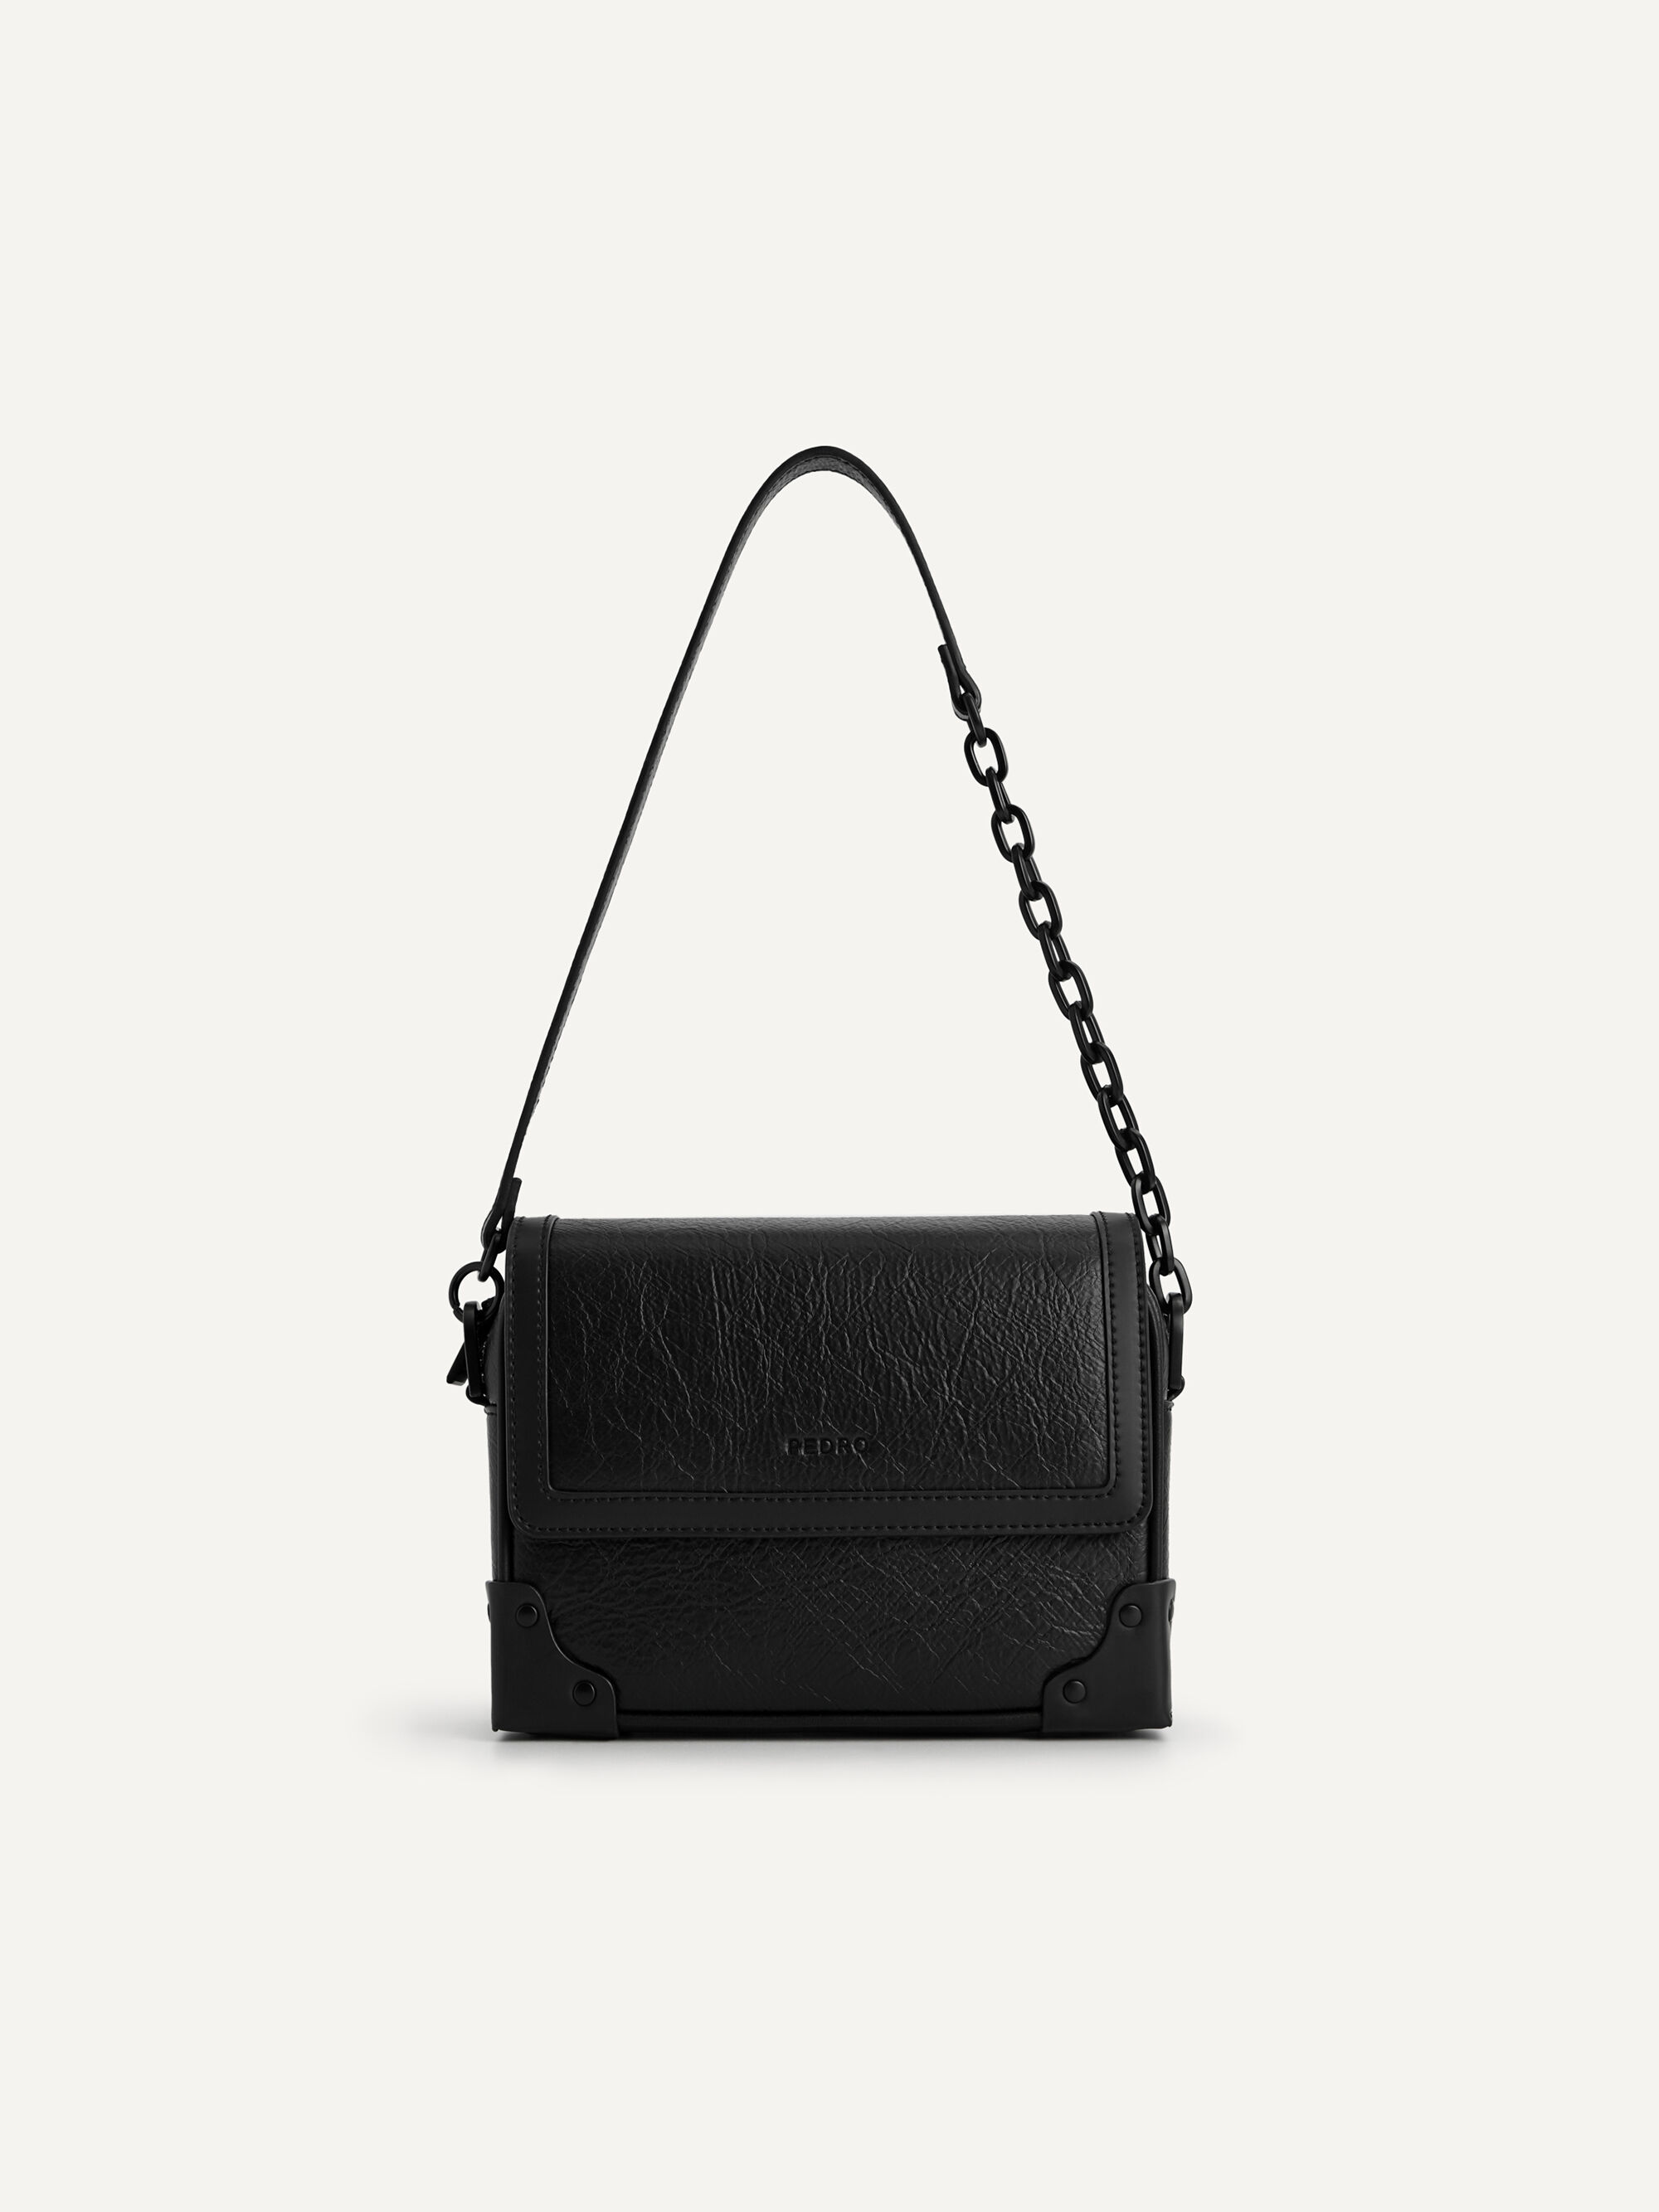 CLN - Black will always be classy 😉 Shop the Brainy Sling Bag